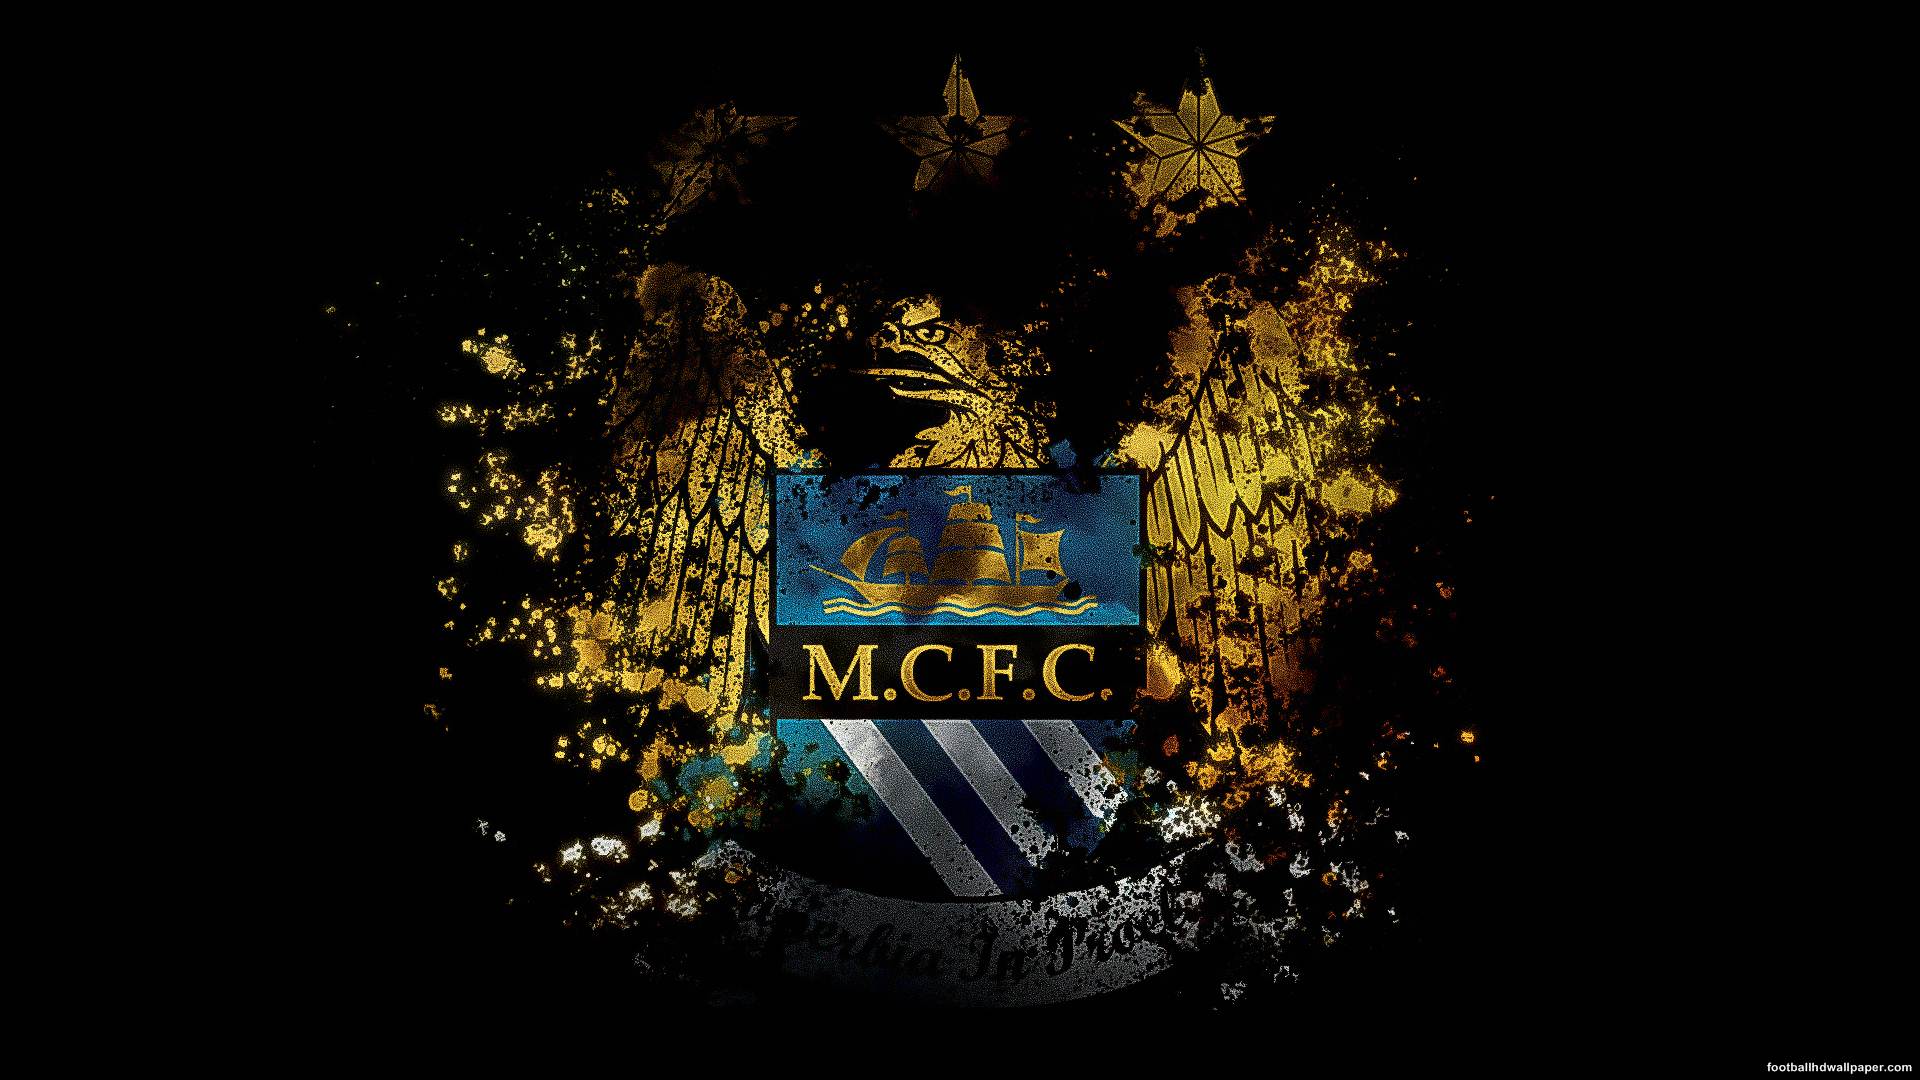 Sports Manchester City F.C. wallpaper Desktop, Phone, Tablet